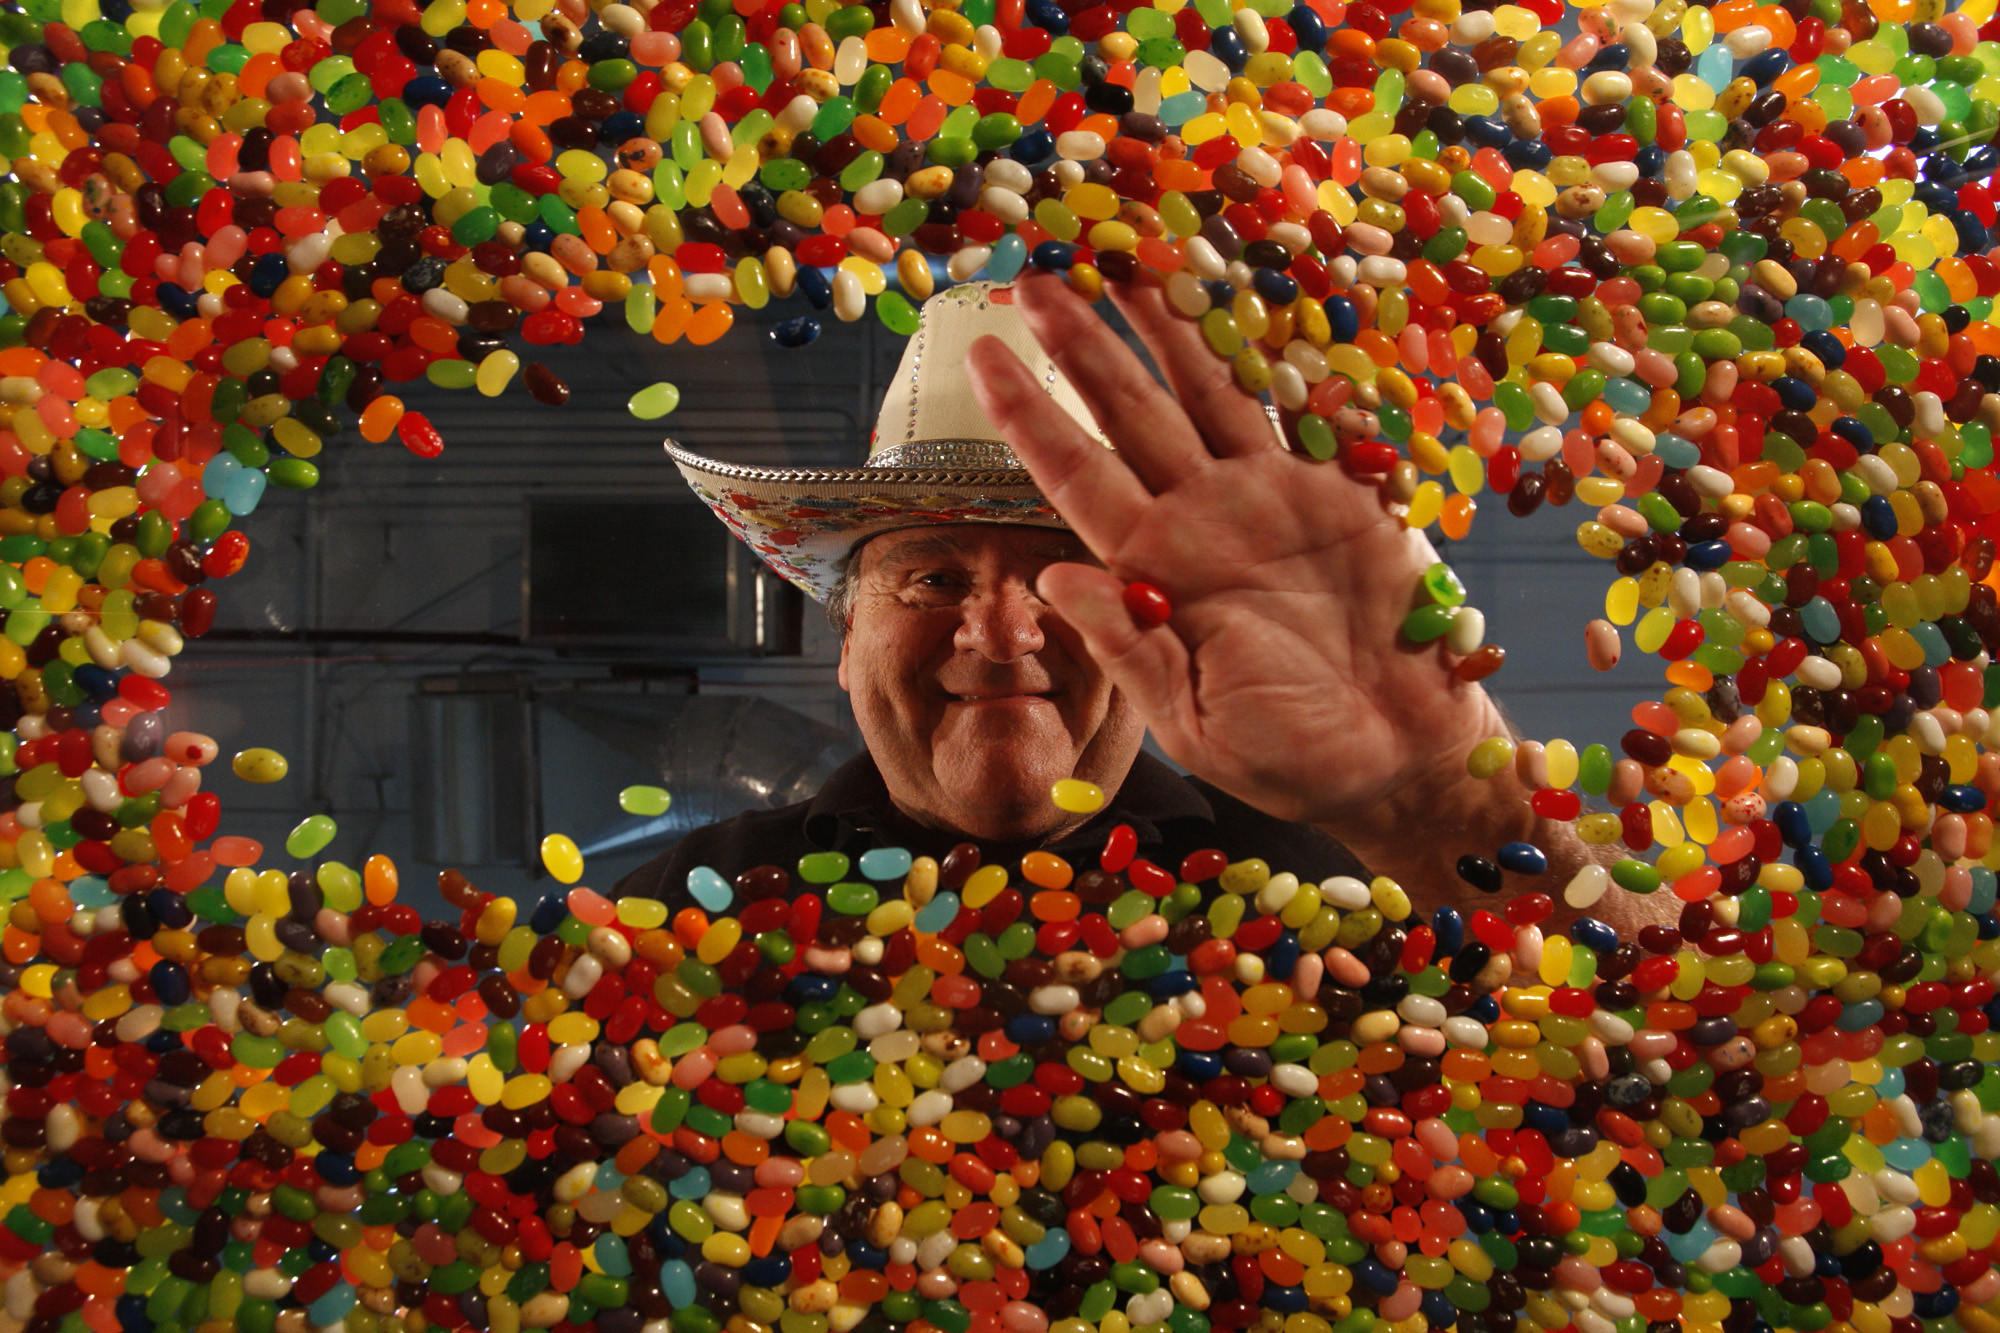 Jelly Belly inventor David Klein is shown in 2011.